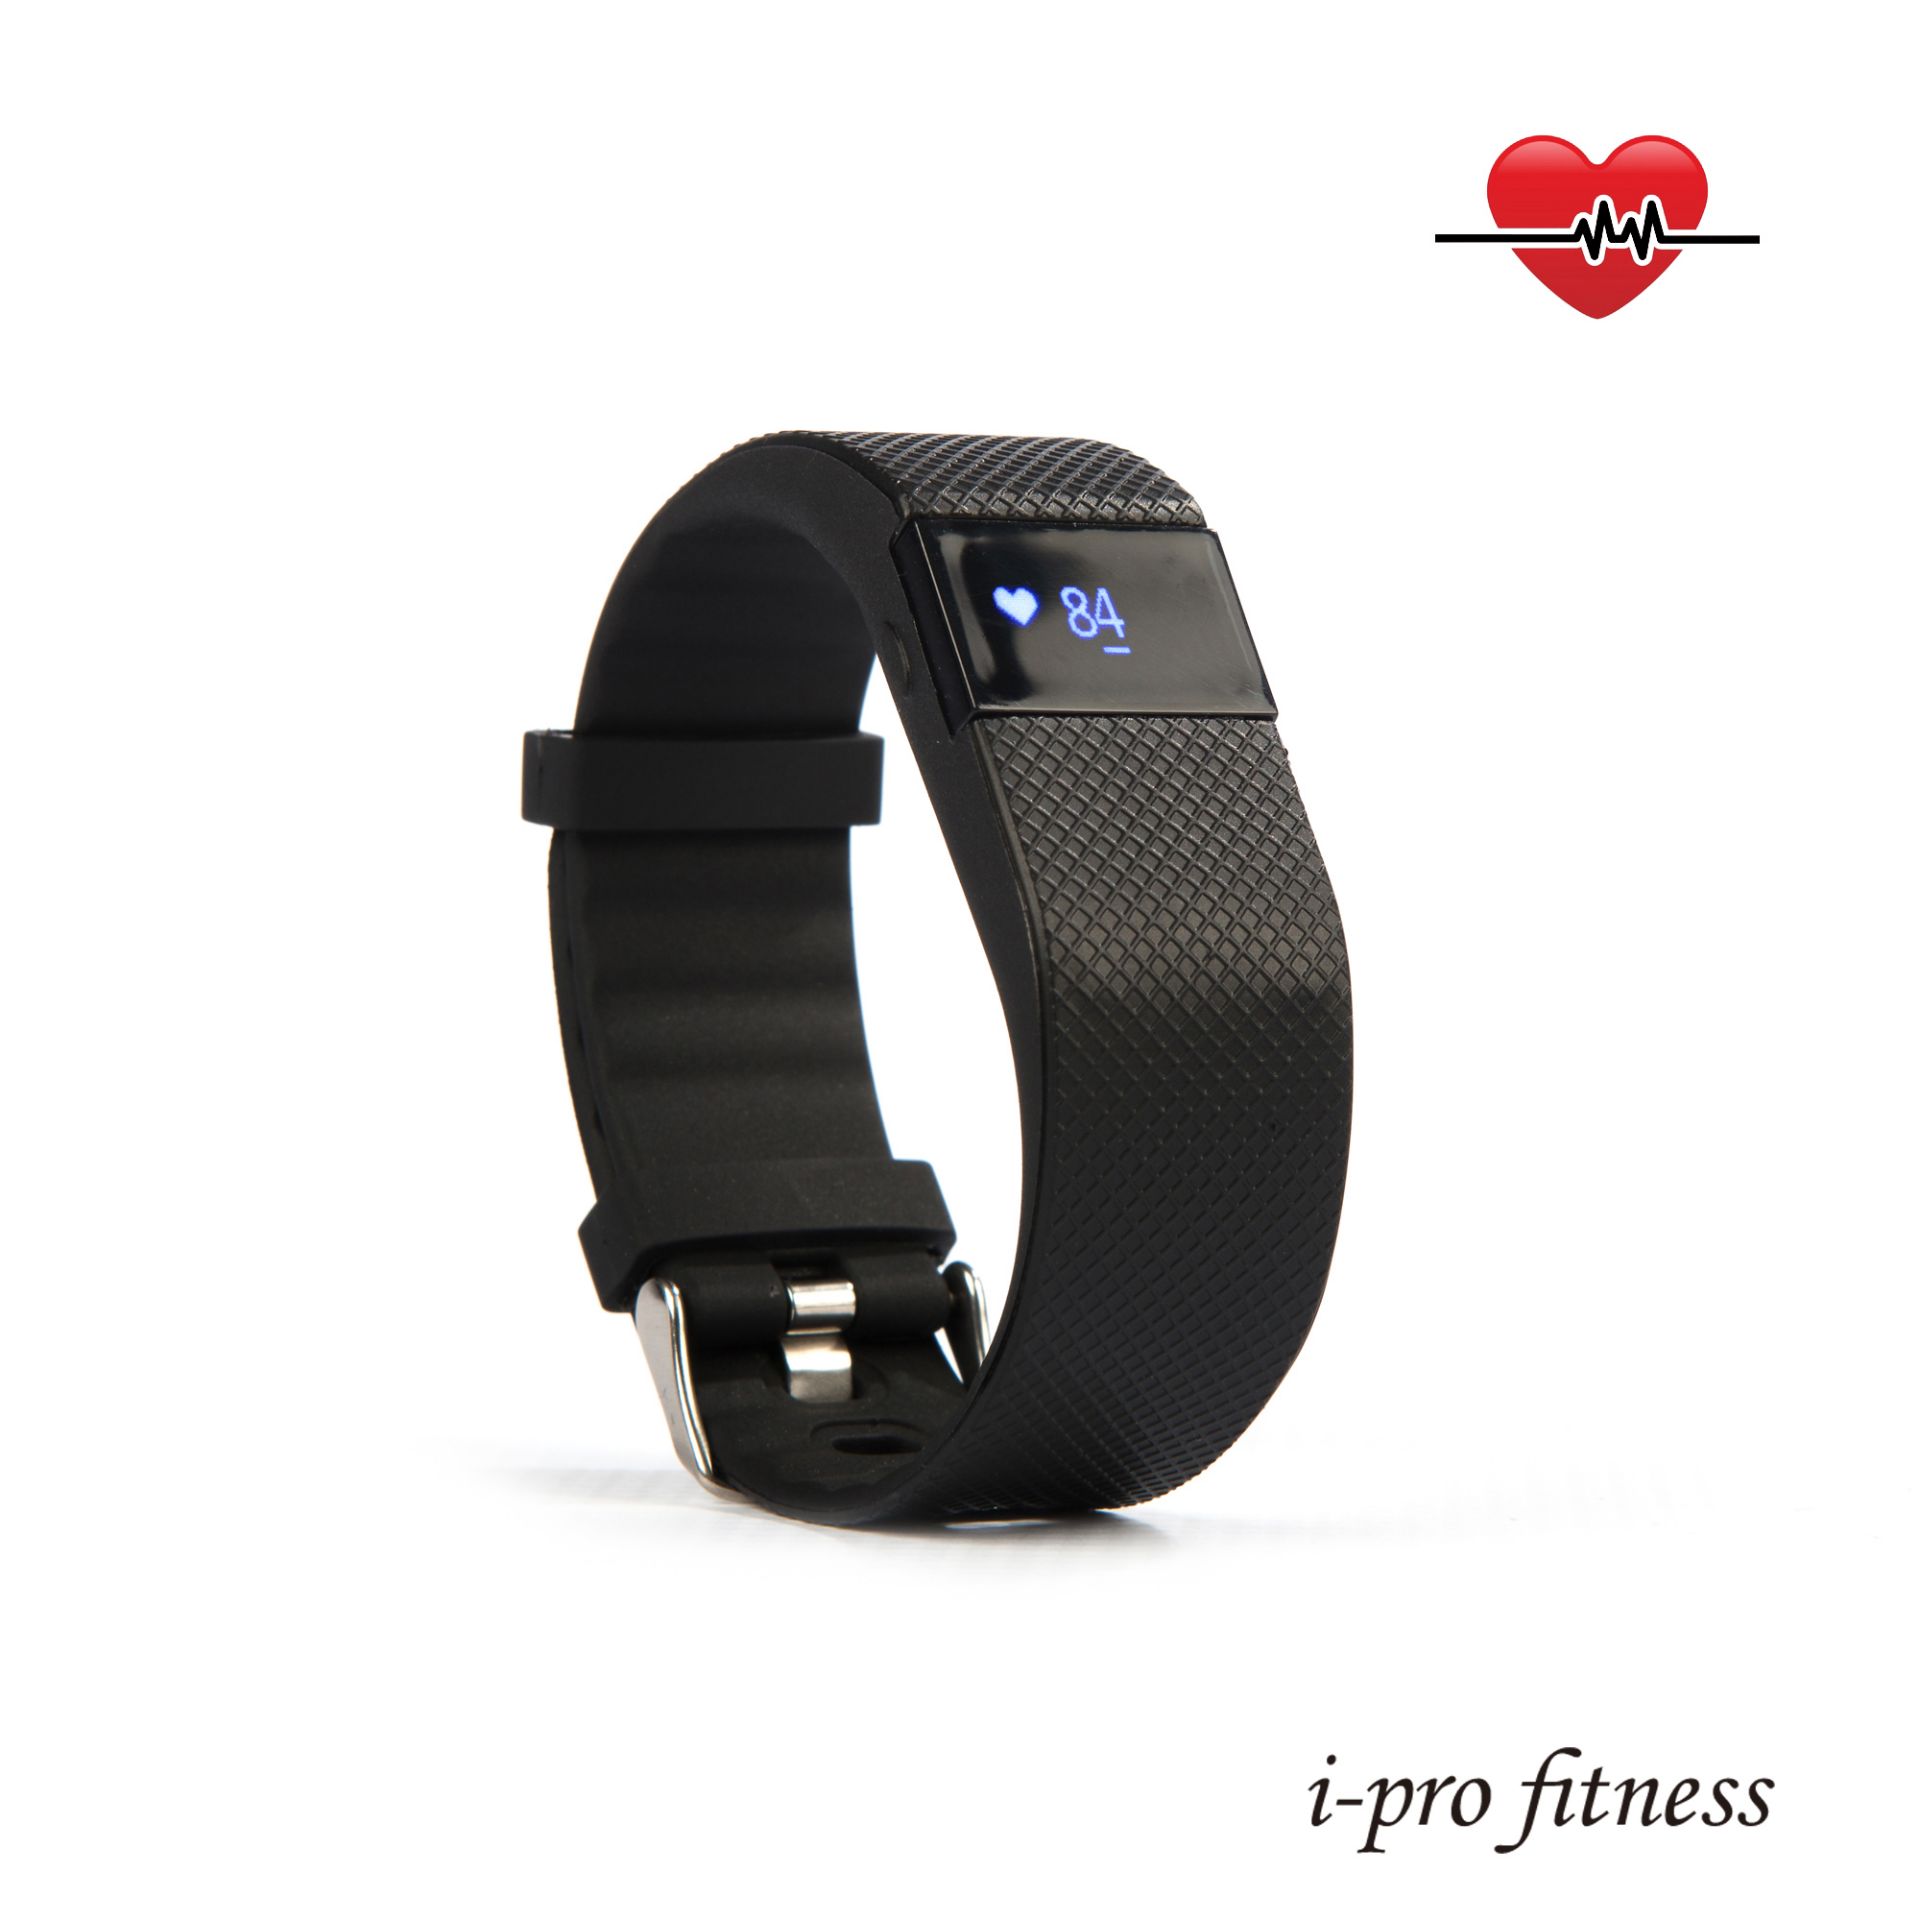 Fitness Tracker i-pro fitness, Bluetooth 4.0 Sports Smart Bracelet, Heart Rate Monitor & Pedometer. - Image 4 of 8